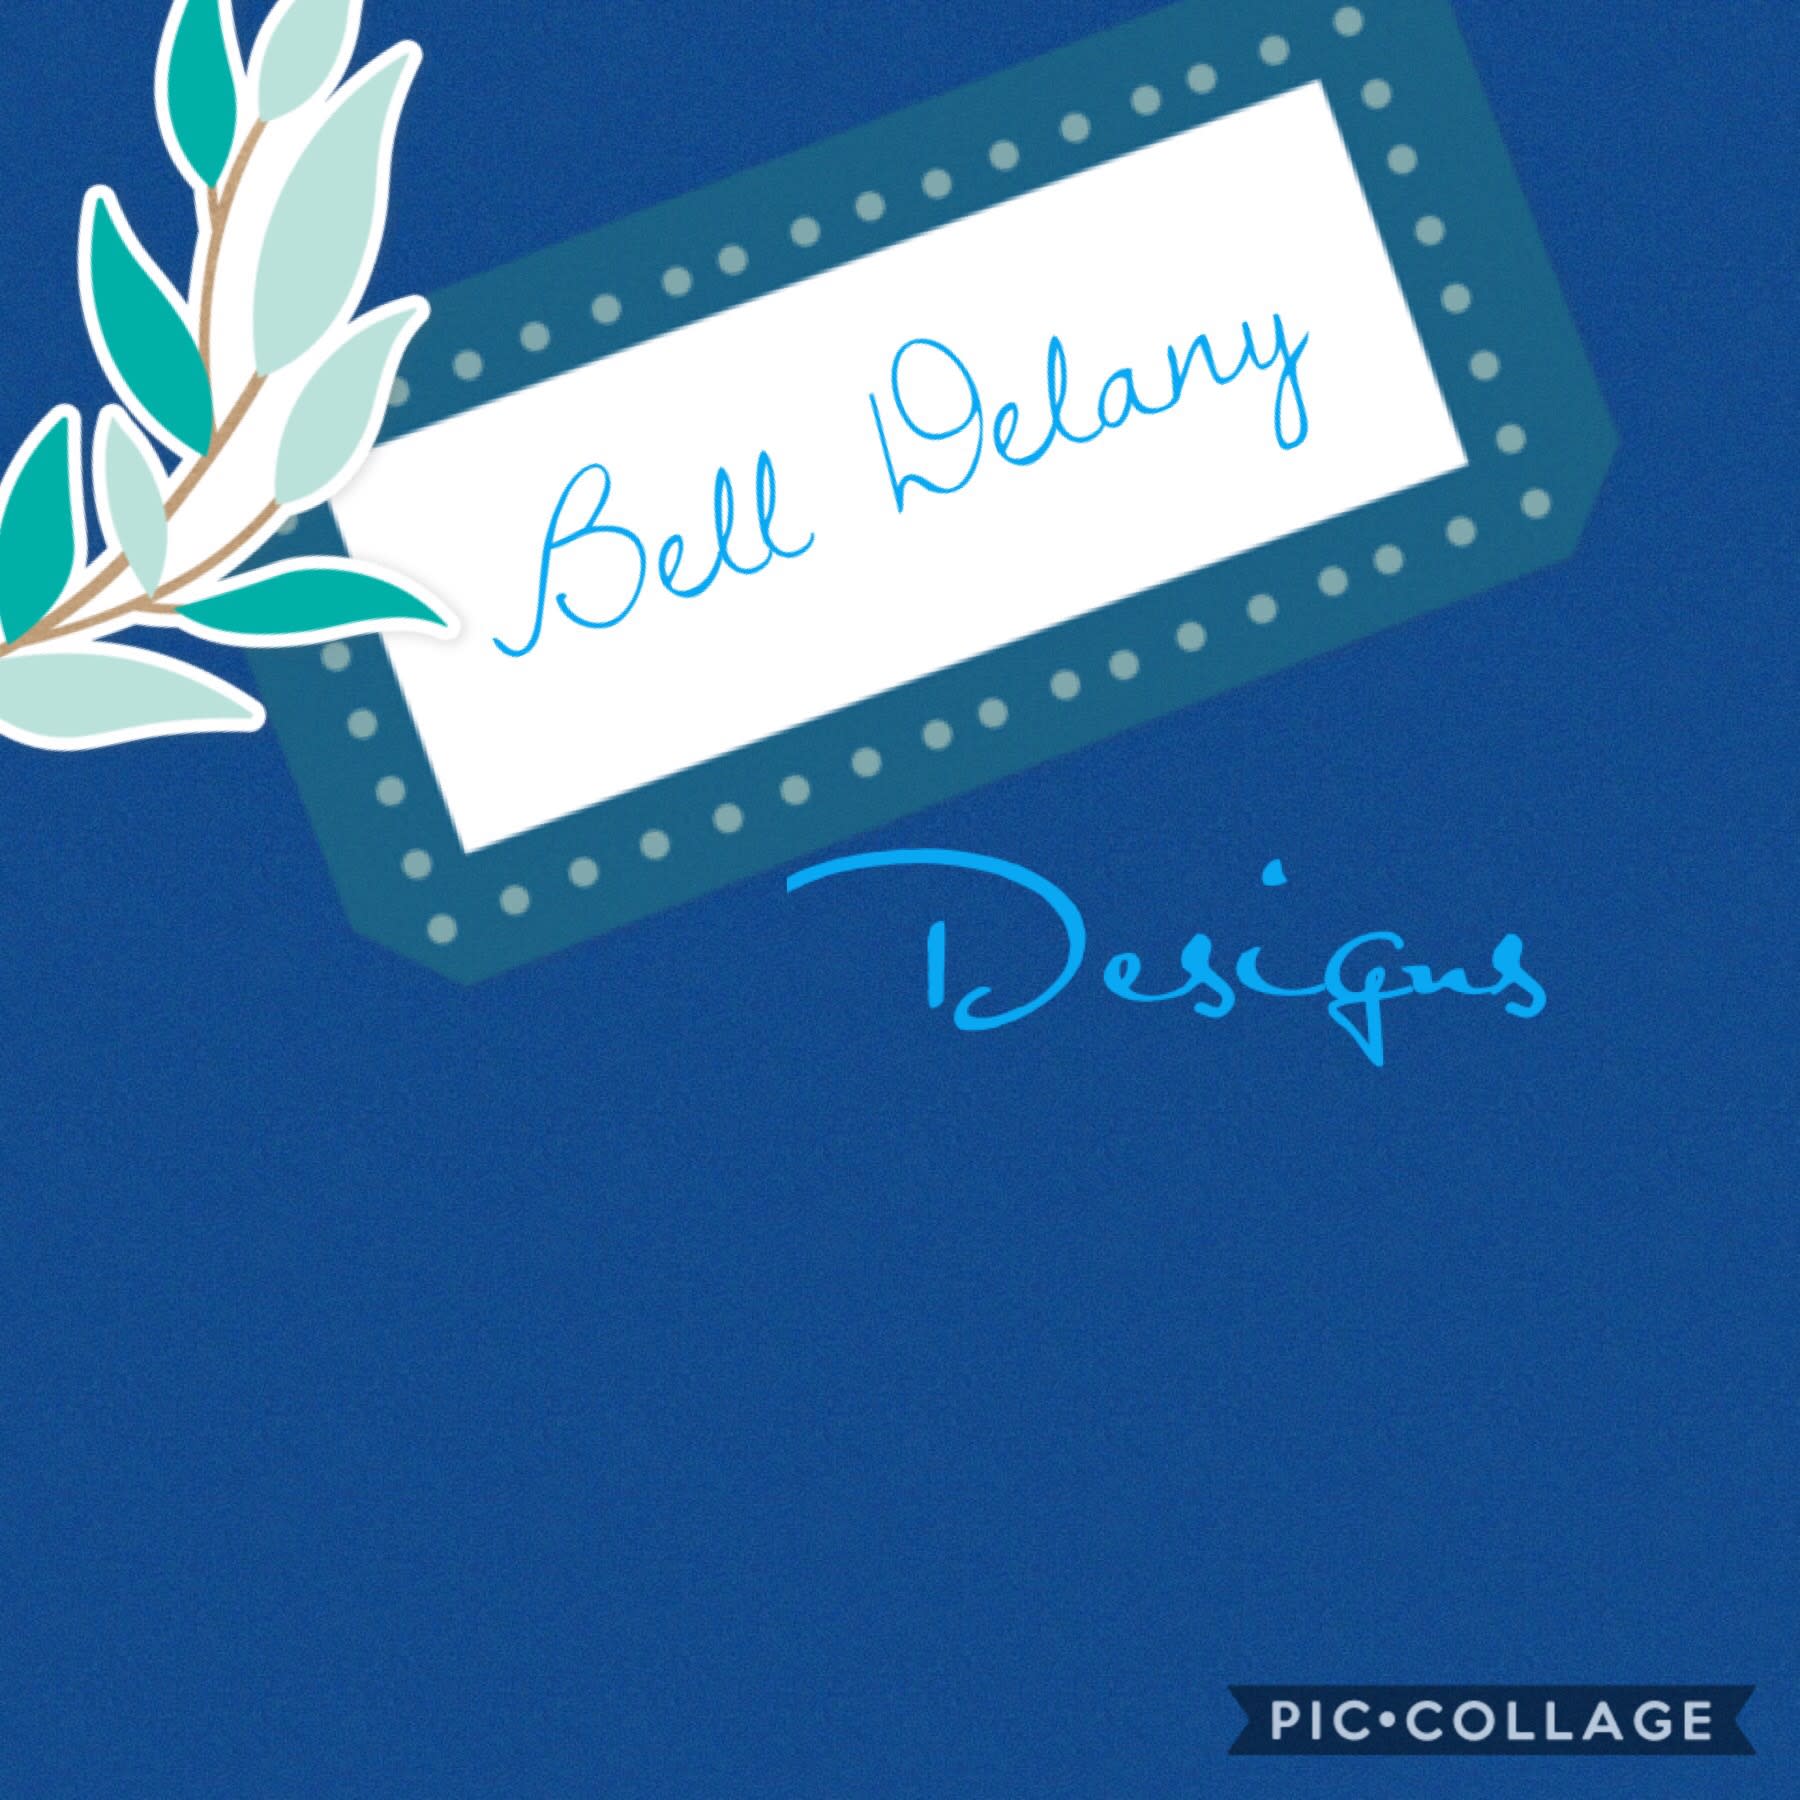 Bell Delany Designs